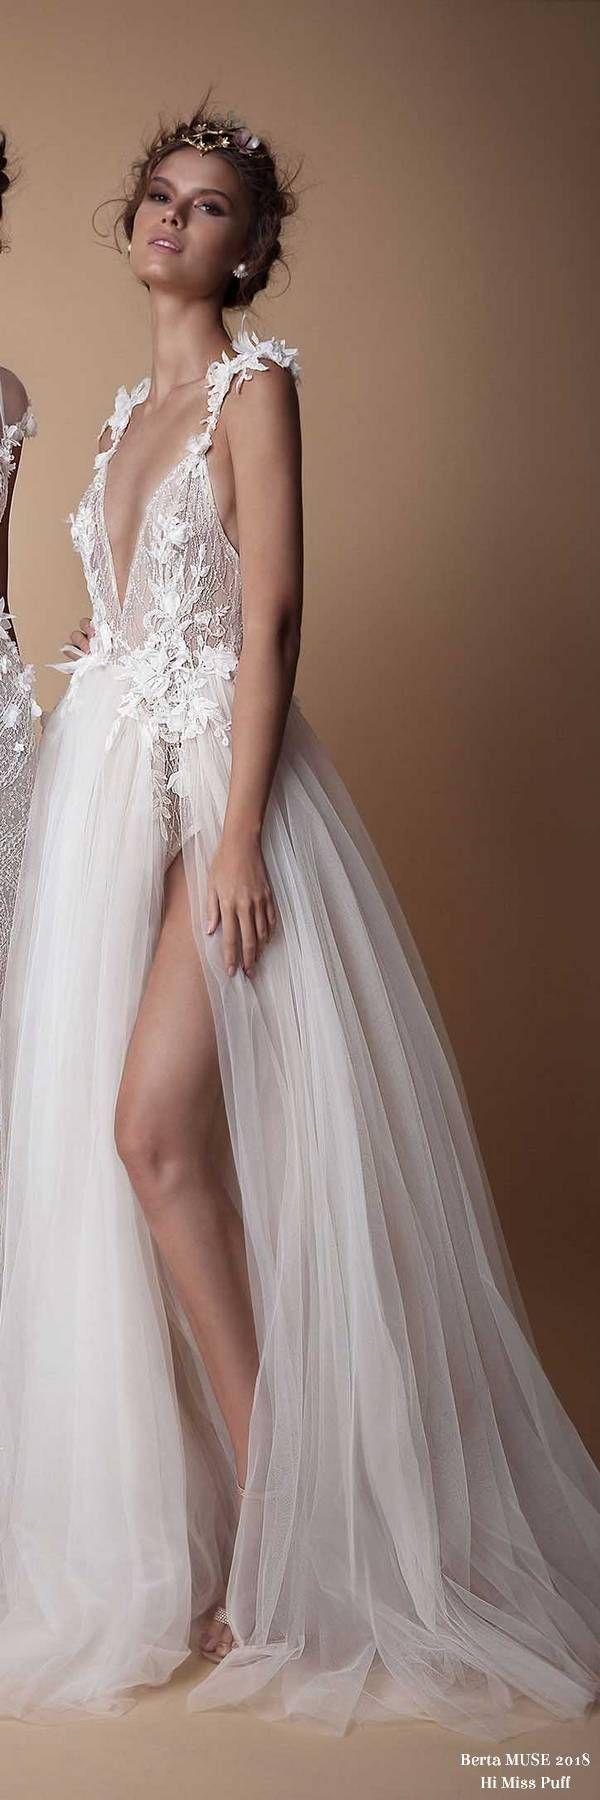 Mariage - Berta MUSE Wedding Dress Collection2018